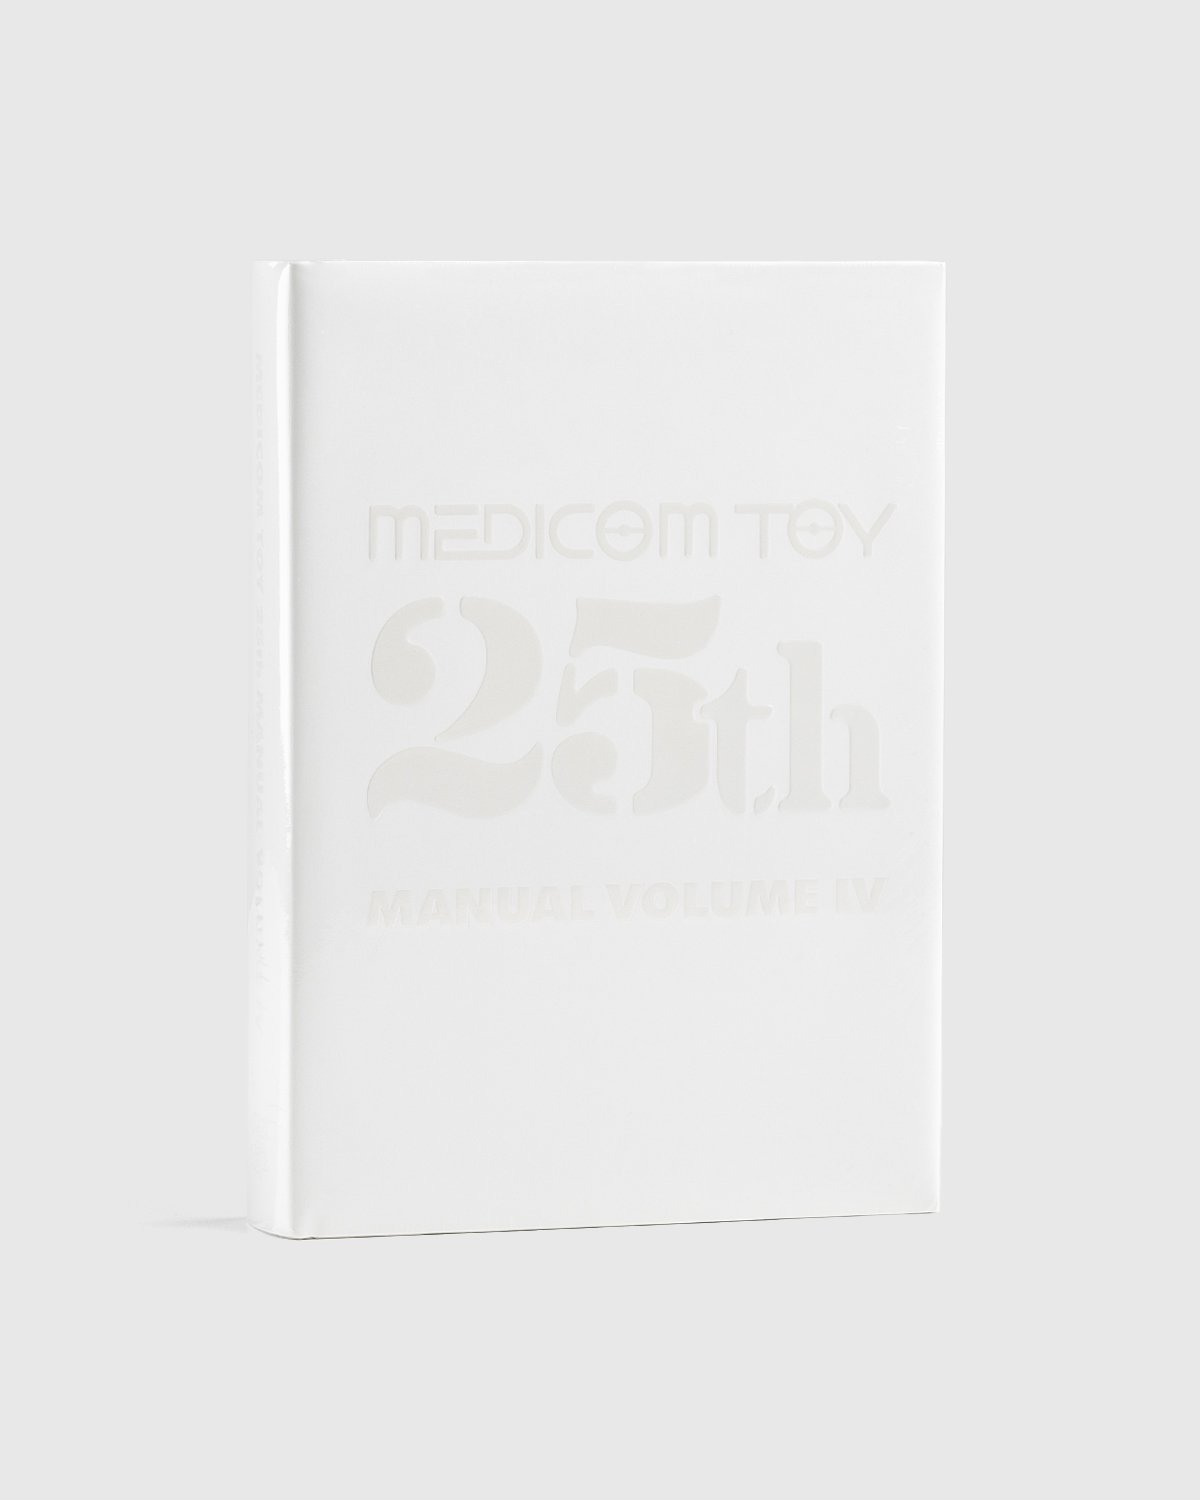 Medicom - Medicom Toy 25th Anniversary Book Manual Volume IV Multi - Lifestyle - White - Image 1